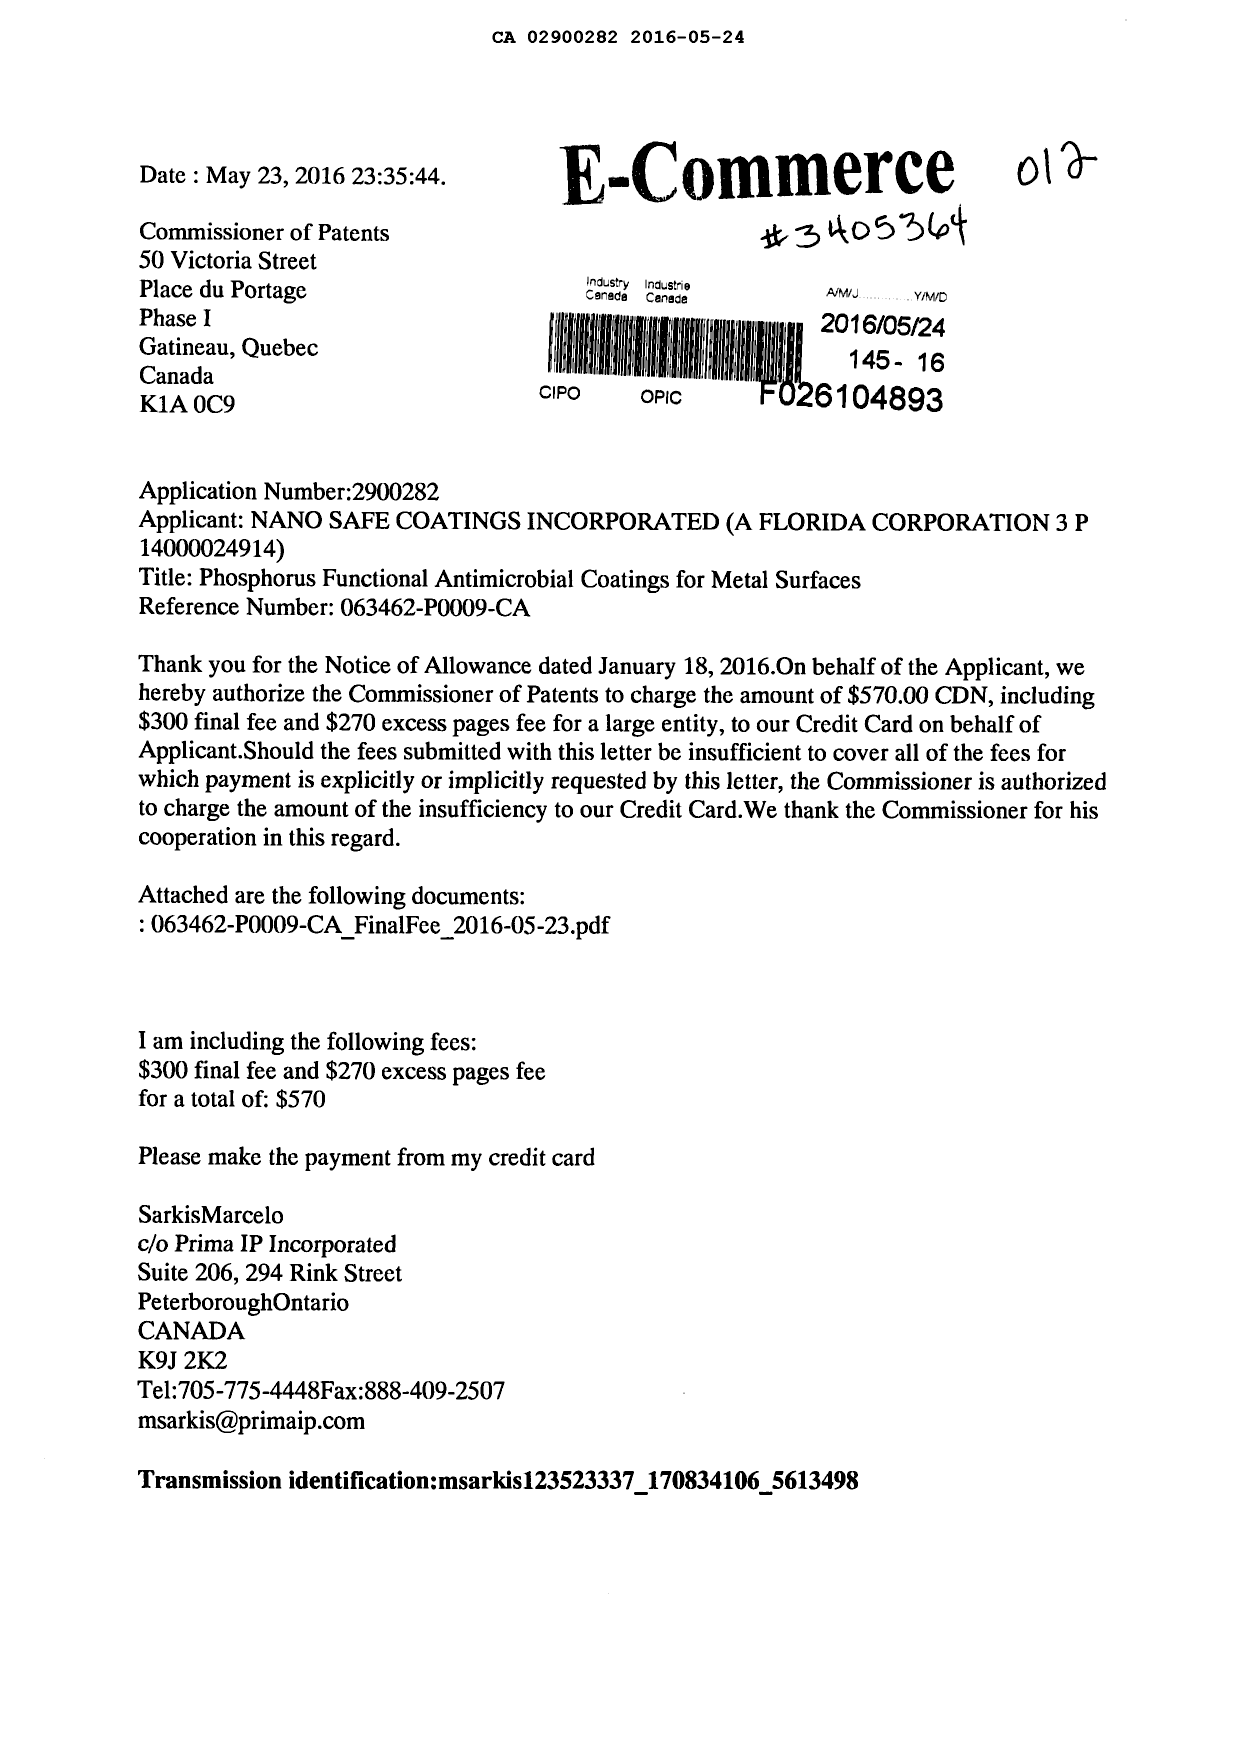 Canadian Patent Document 2900282. Correspondence 20151224. Image 1 of 2